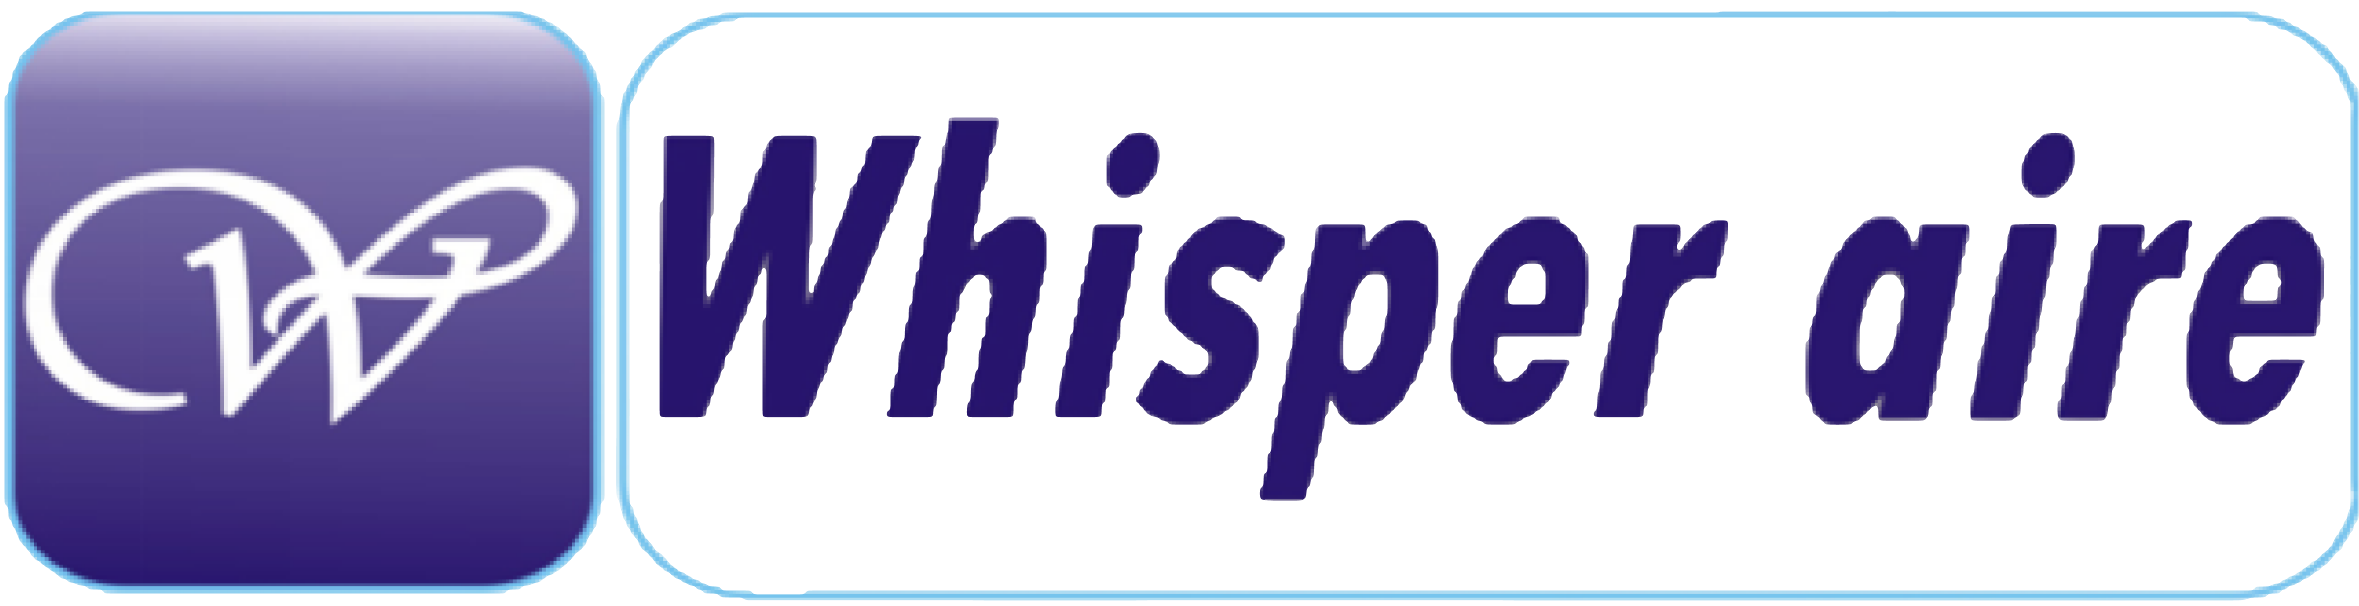 Whisper Air Logo